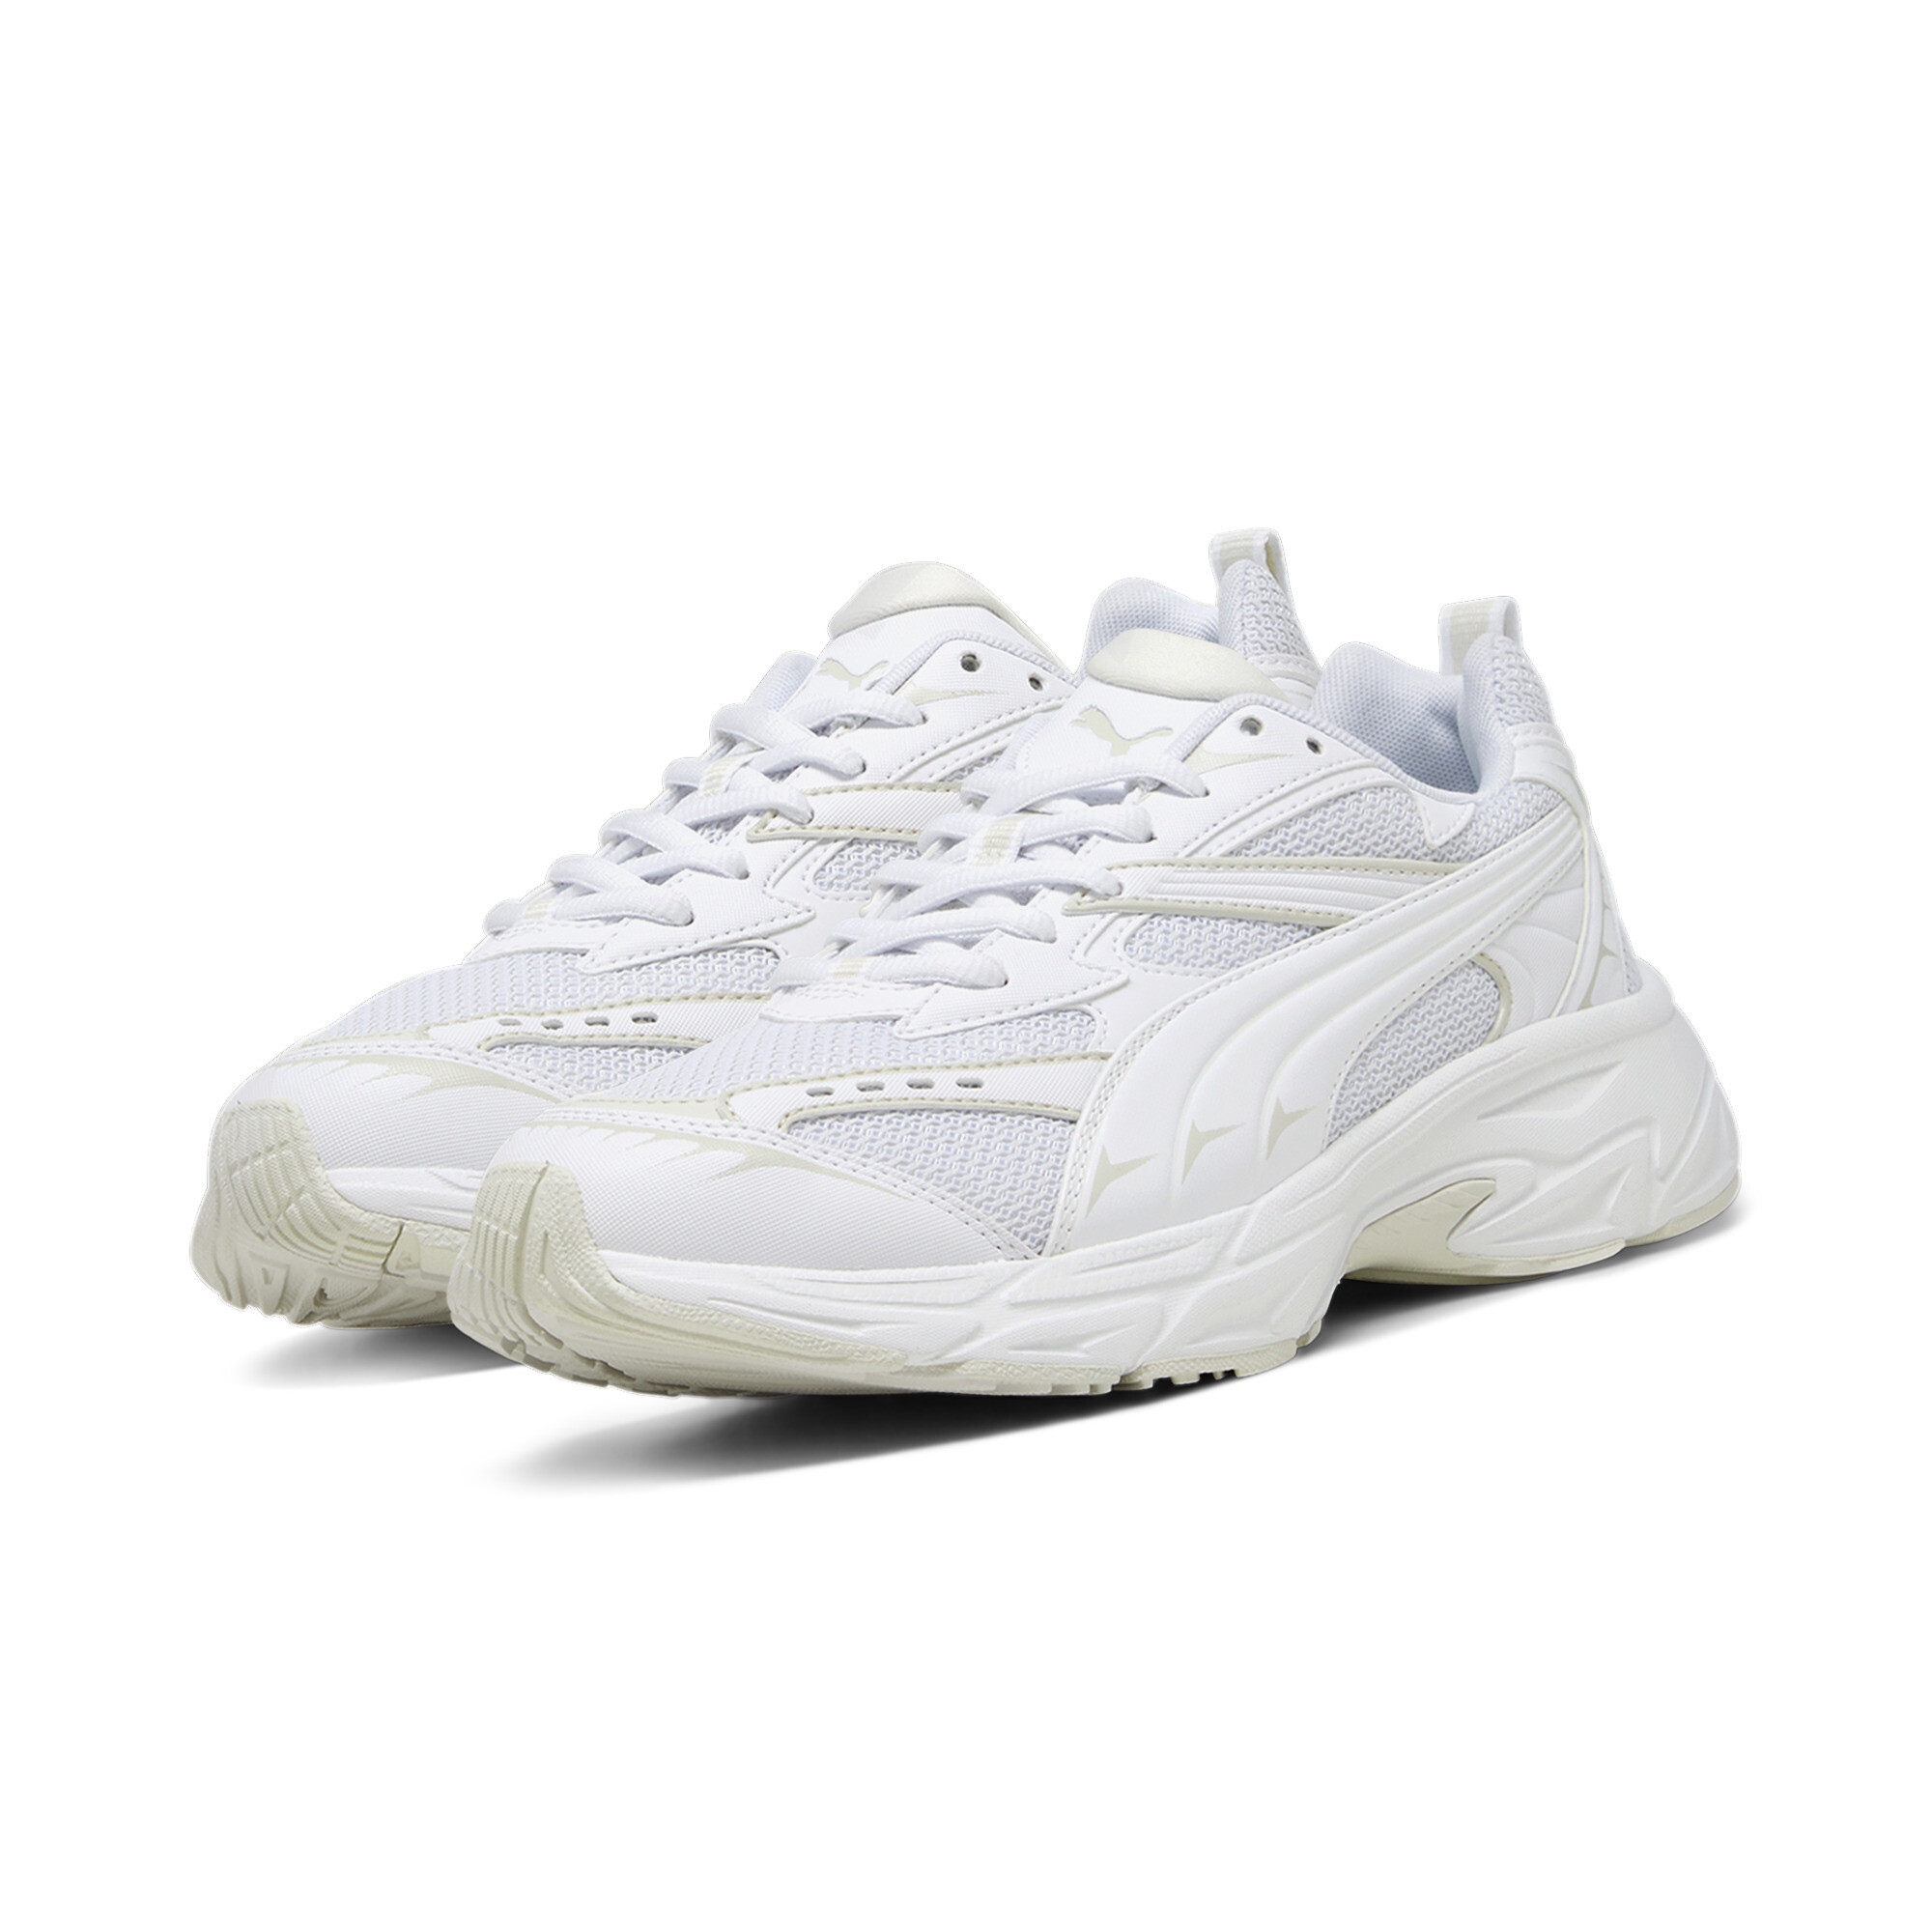 Men's PUMA Morphic Base Sneakers In White, Size EU 40